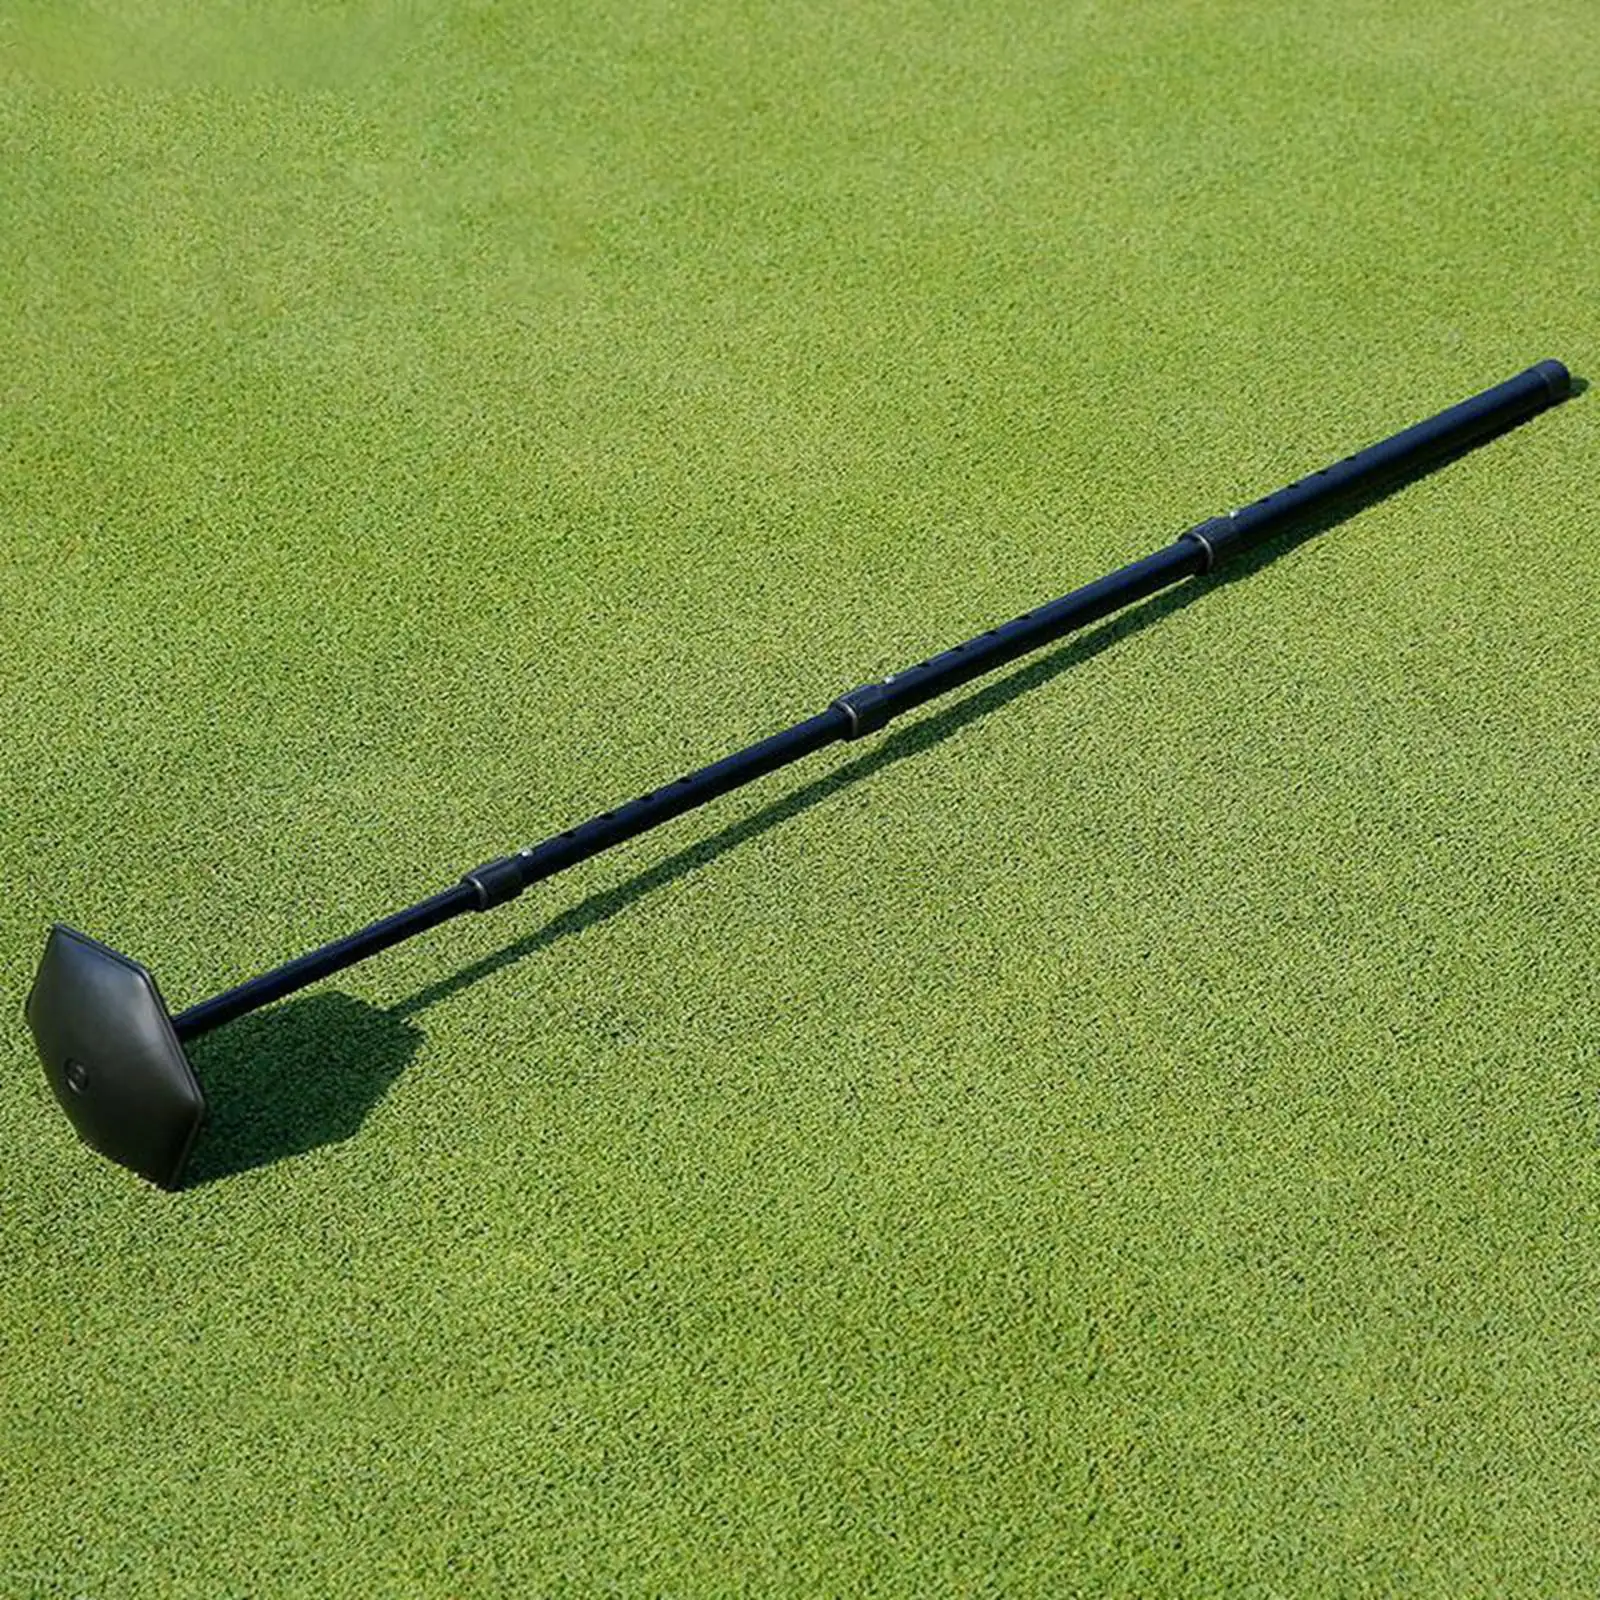 Aluminum Alloy Golf Club Stiff Arm Support Rod, Telescoping Golf